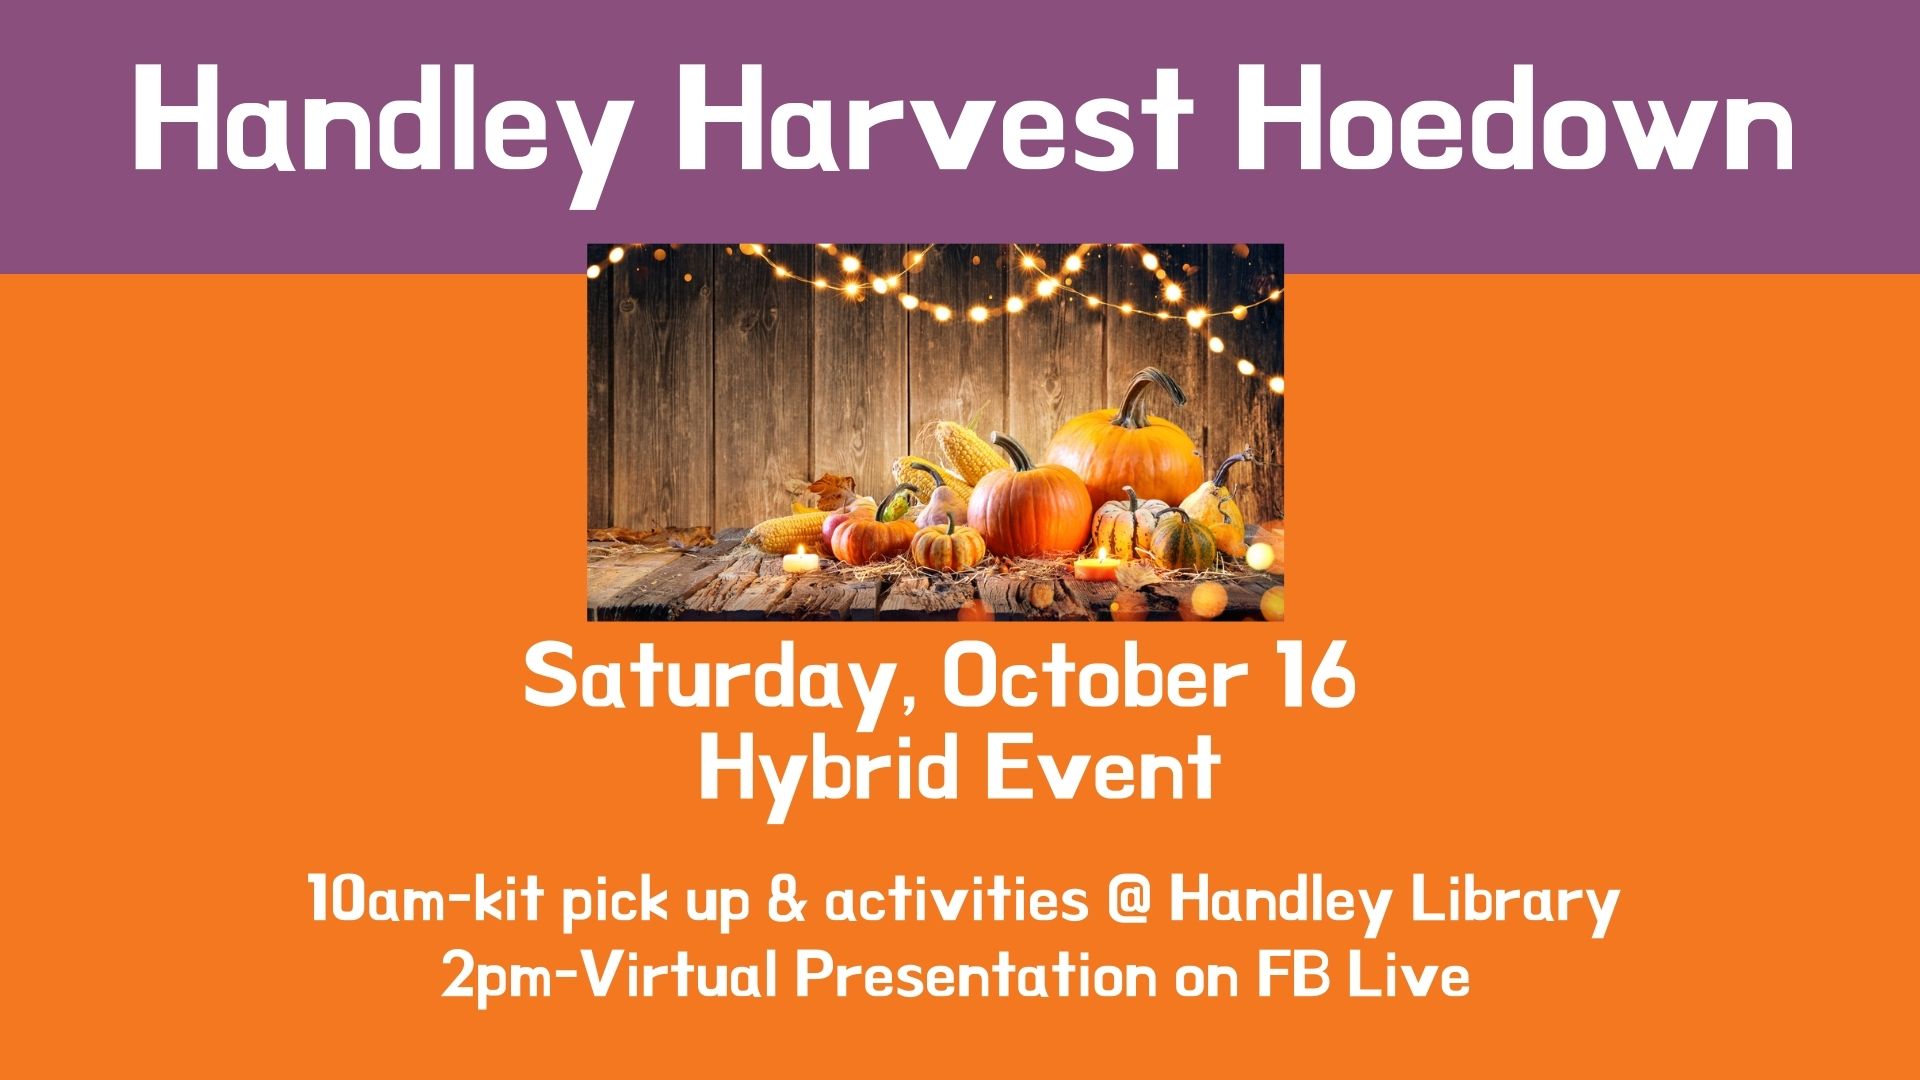 Handley Harvest Hoedown